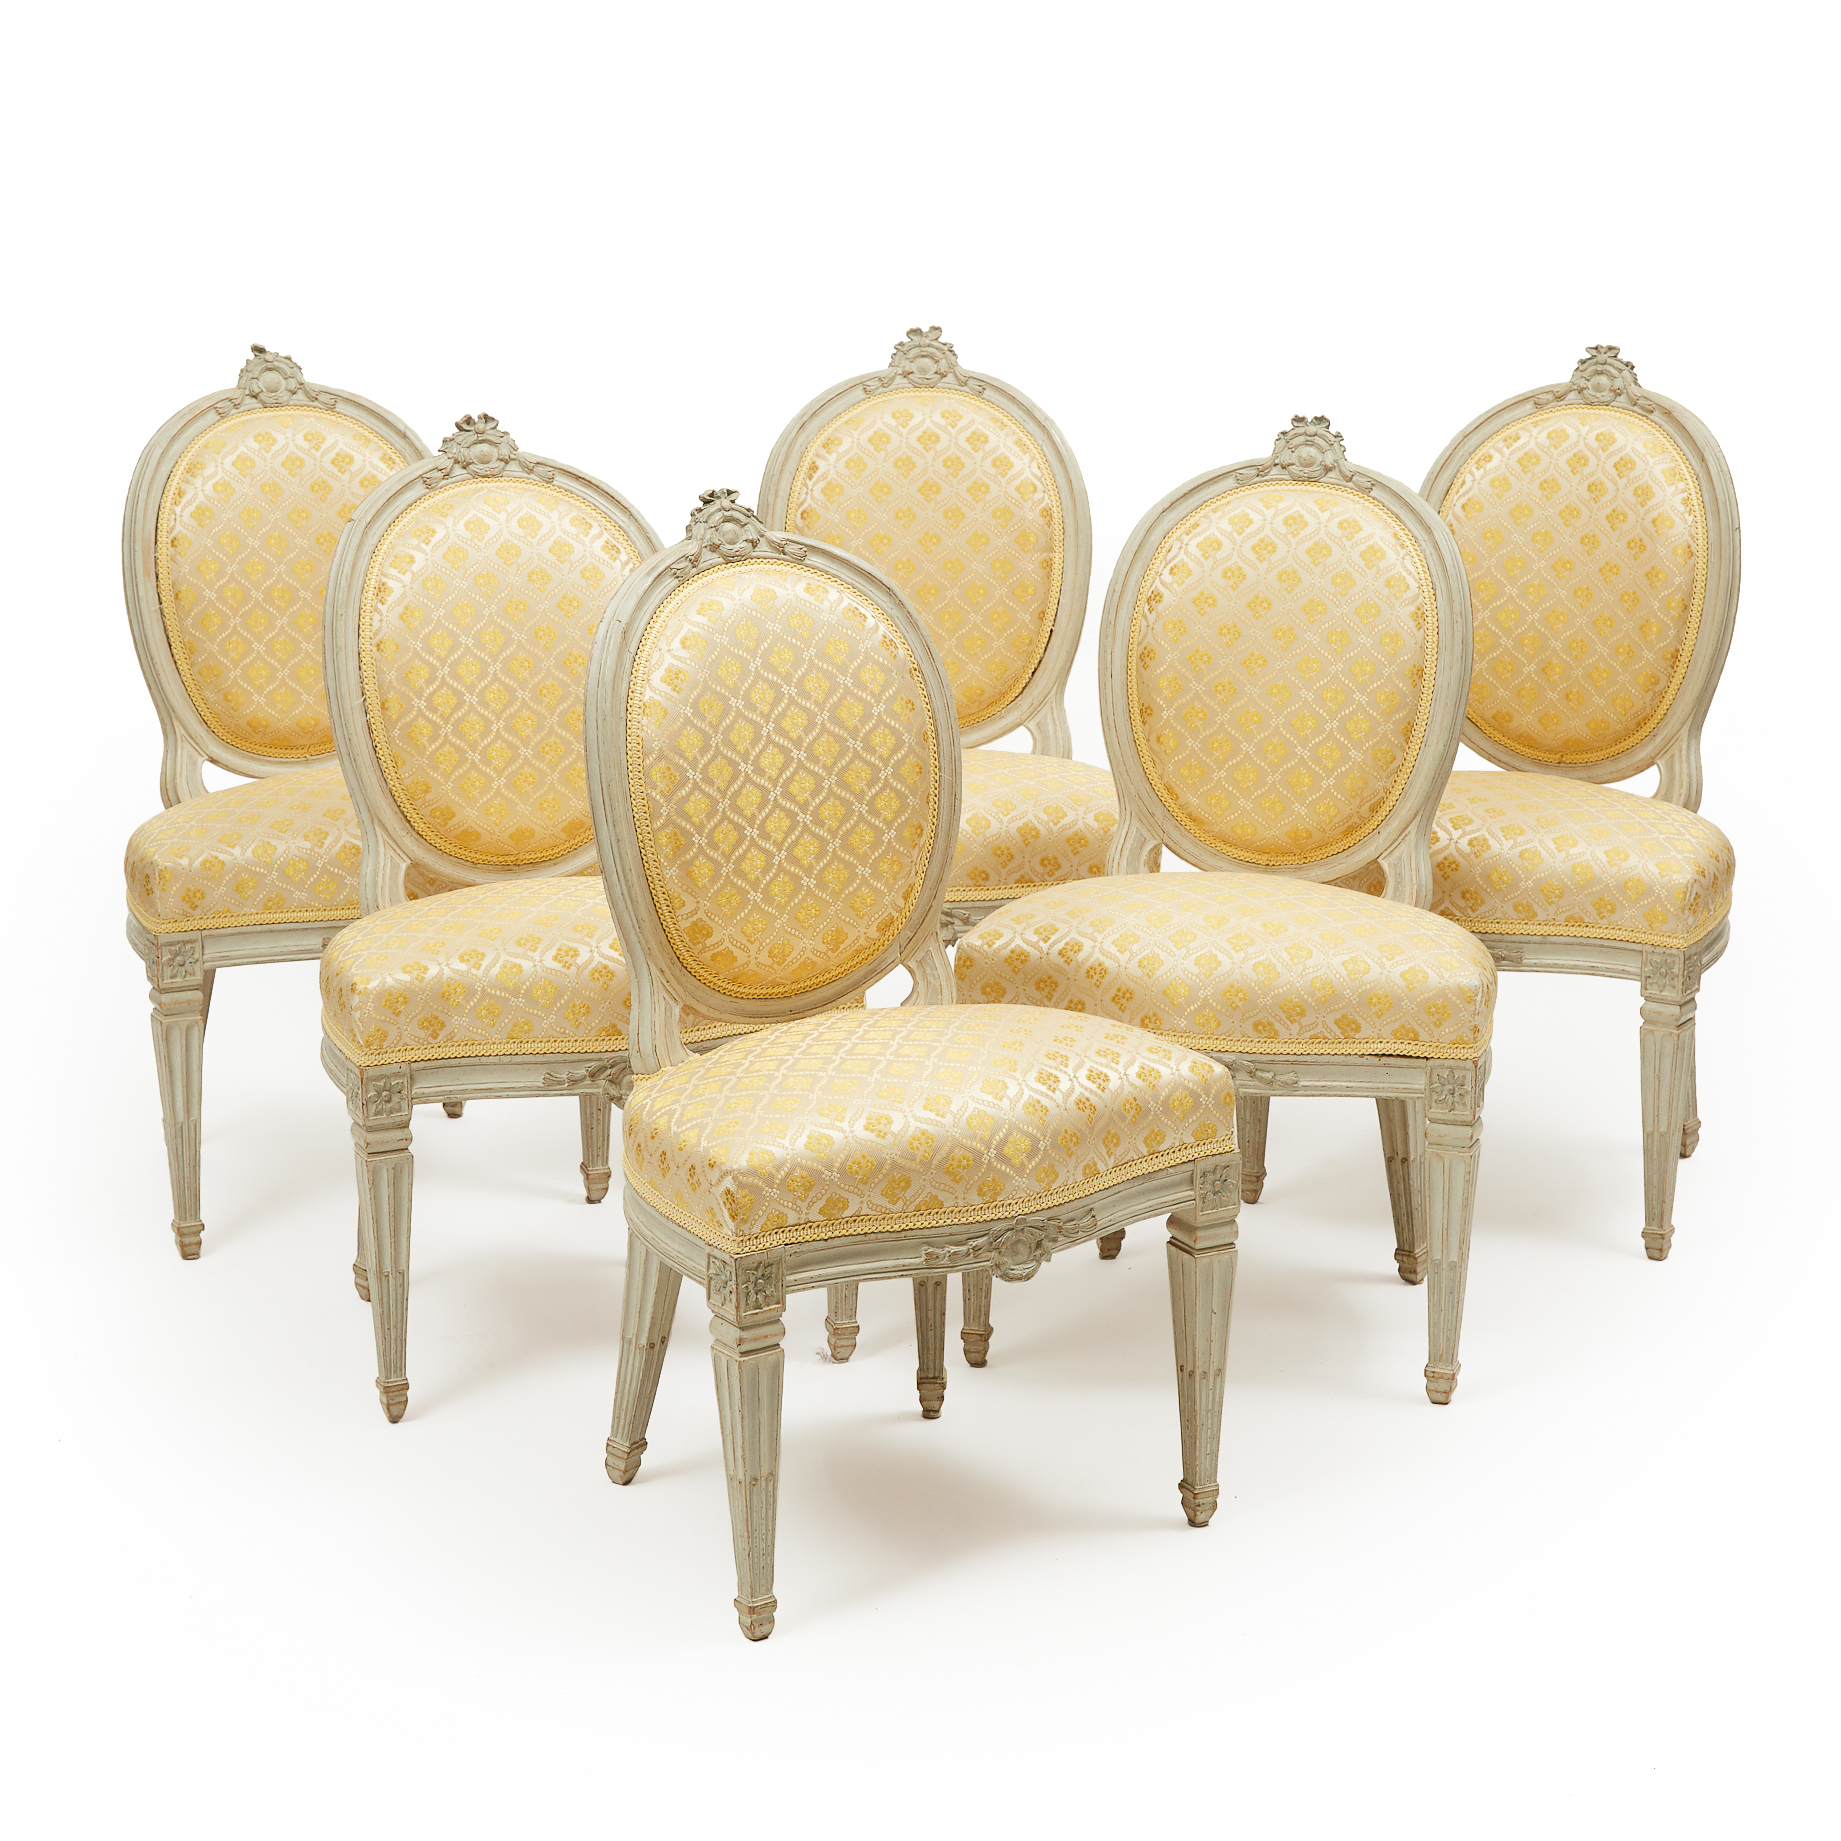 Set of SIx Louis XVI Dining Chairs, 18th century